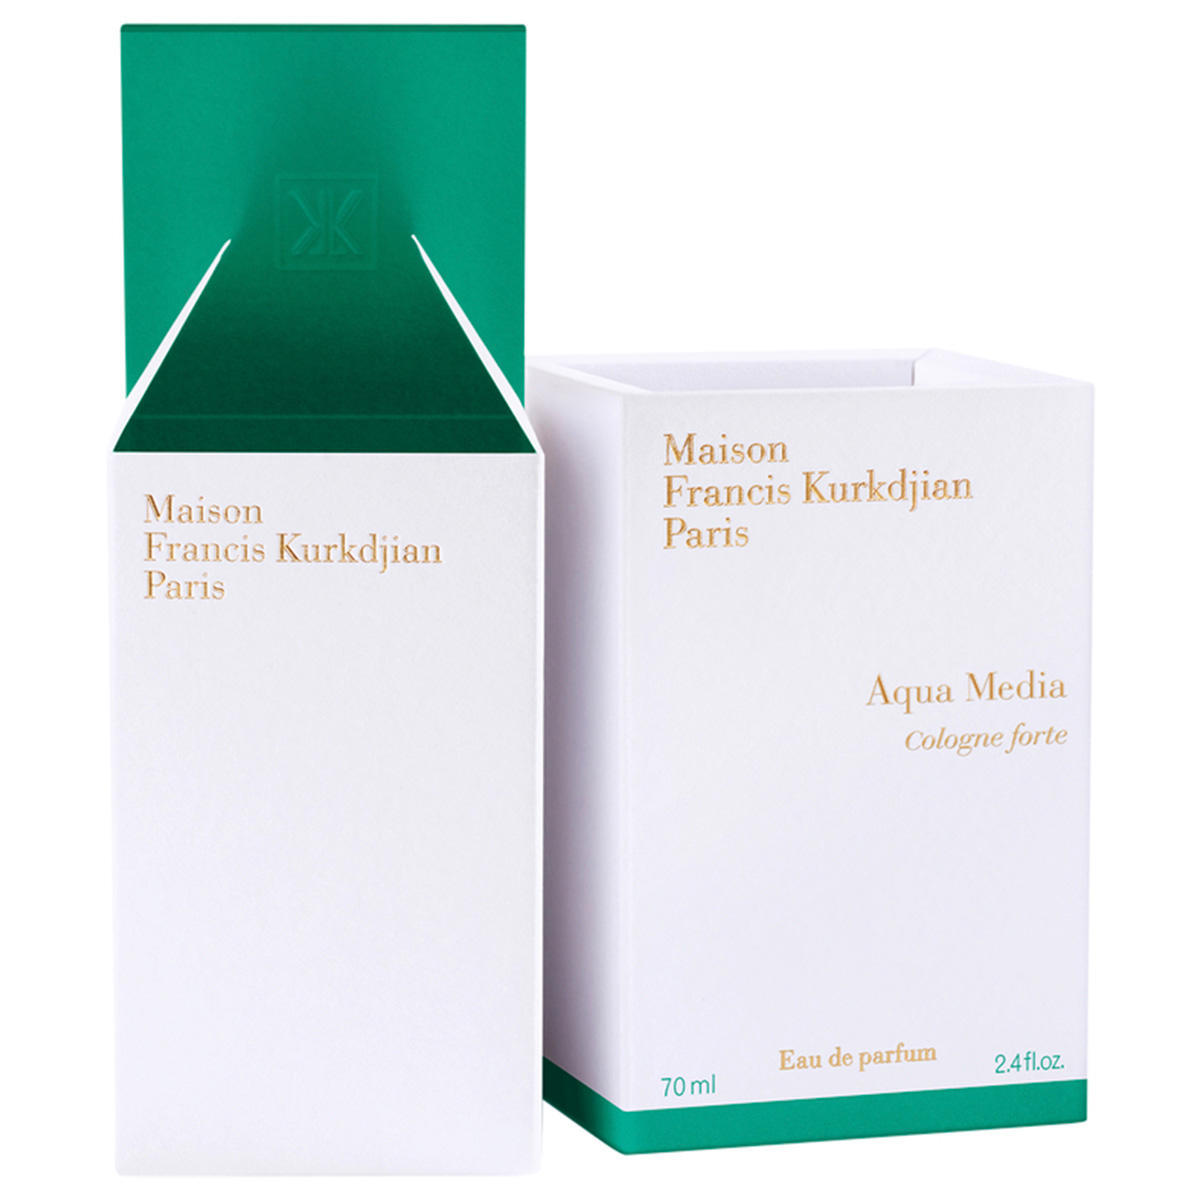 Maison Francis Kurkdjian Paris Aqua Media Cologne forte Eau de Parfum 70 ml - 3